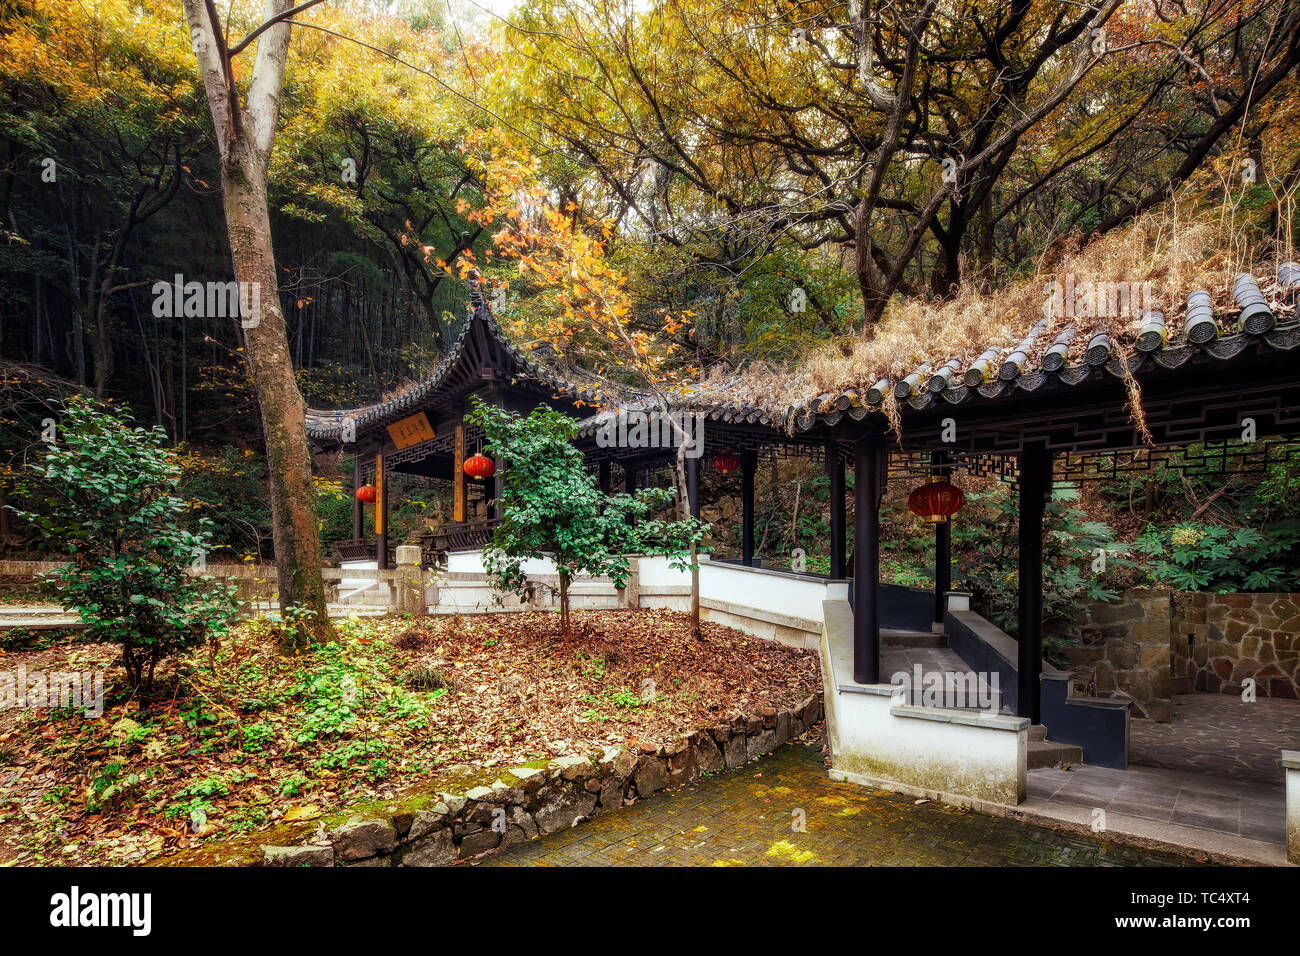 Suzhou famous scenic spot Muzu Dome Mountain, legendary Chinese ancient ...